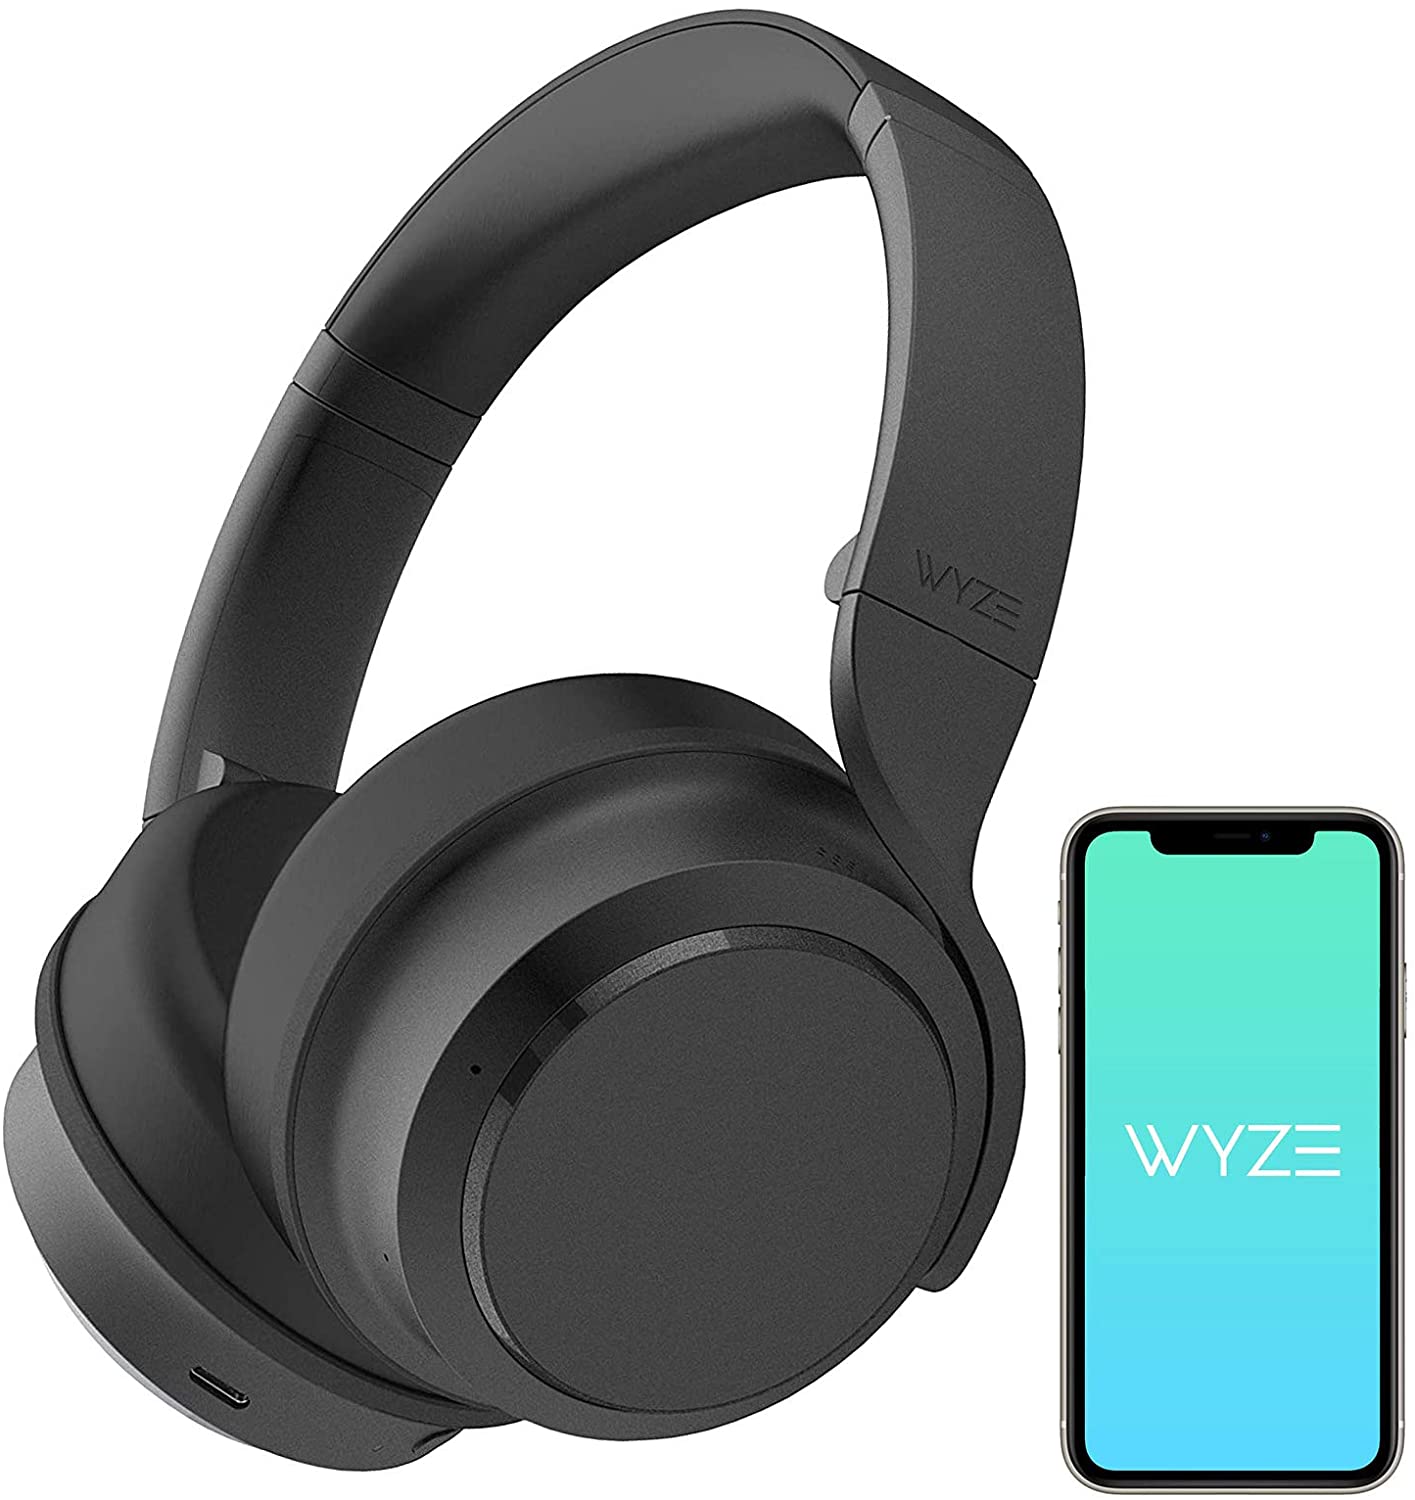 WYZE Wireless Active Noise Cancelling Headphones $57.78